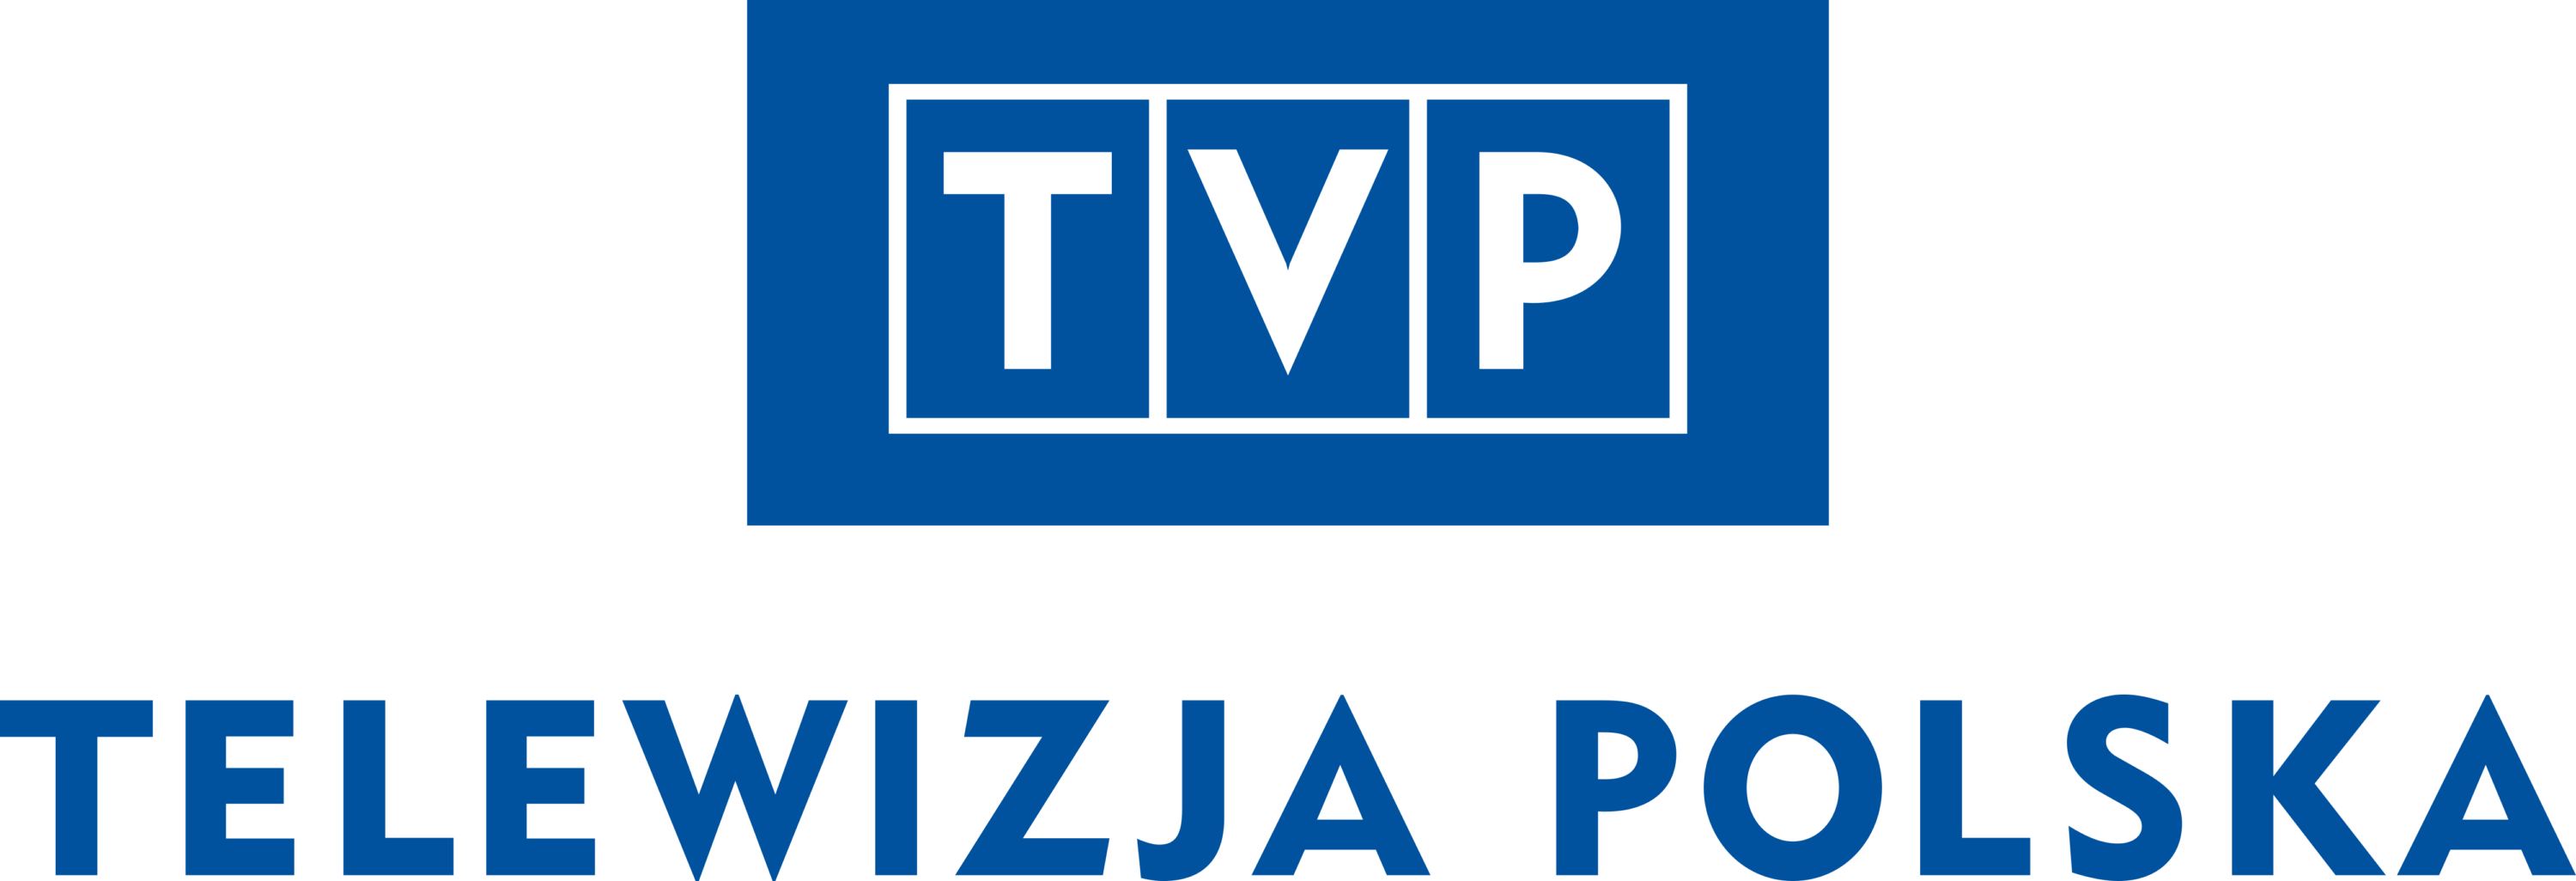 Telewizja Polska full version Logo 2003